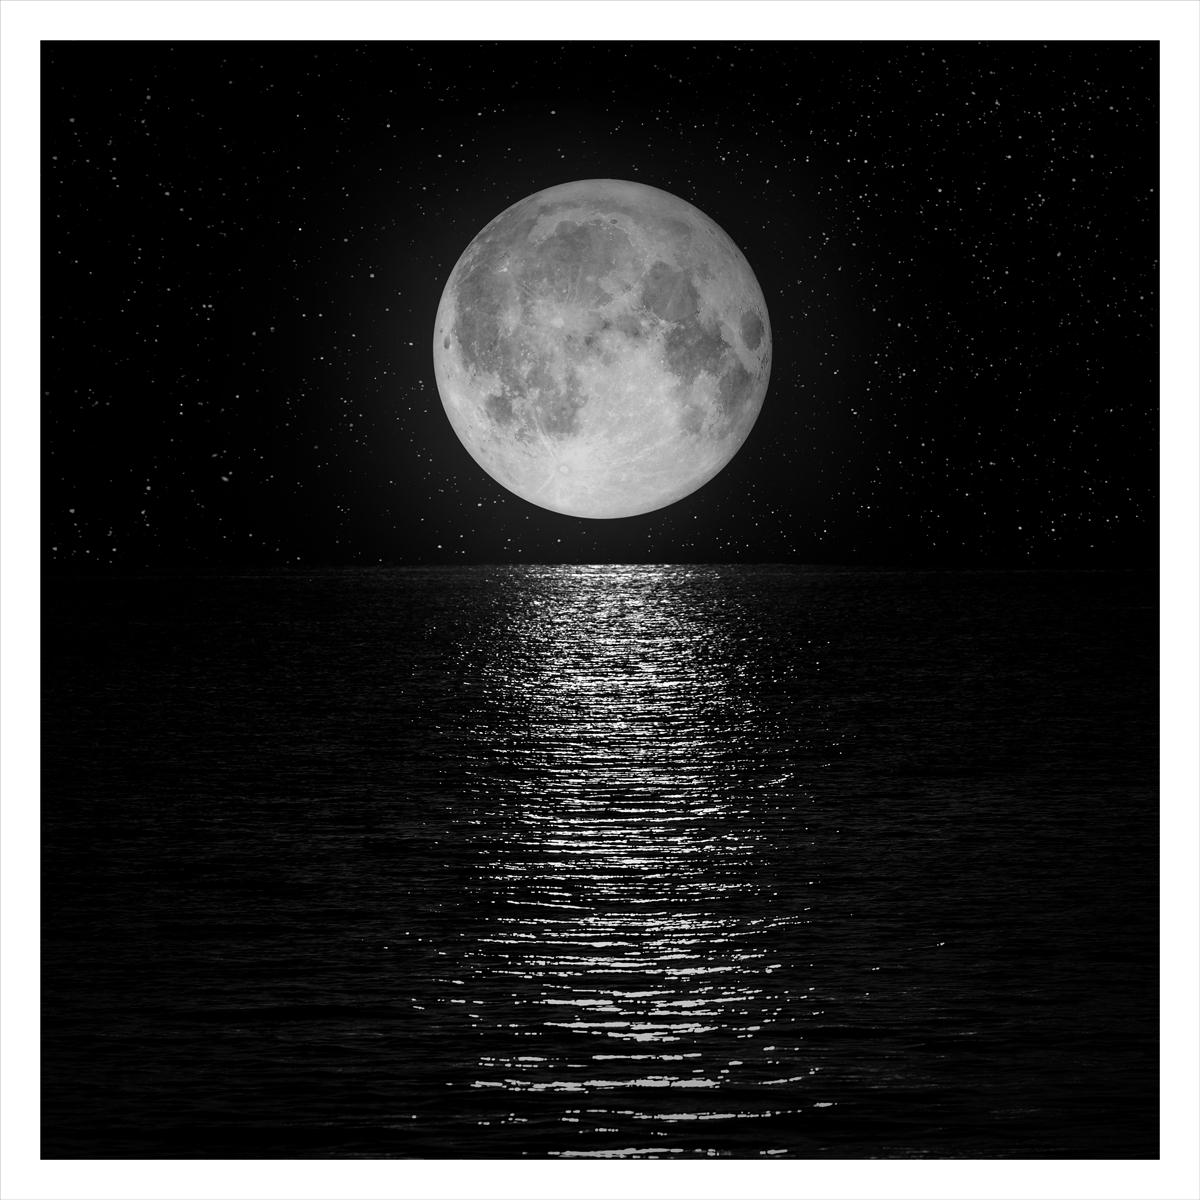 Moon #28 - Photograph by Bob Tabor